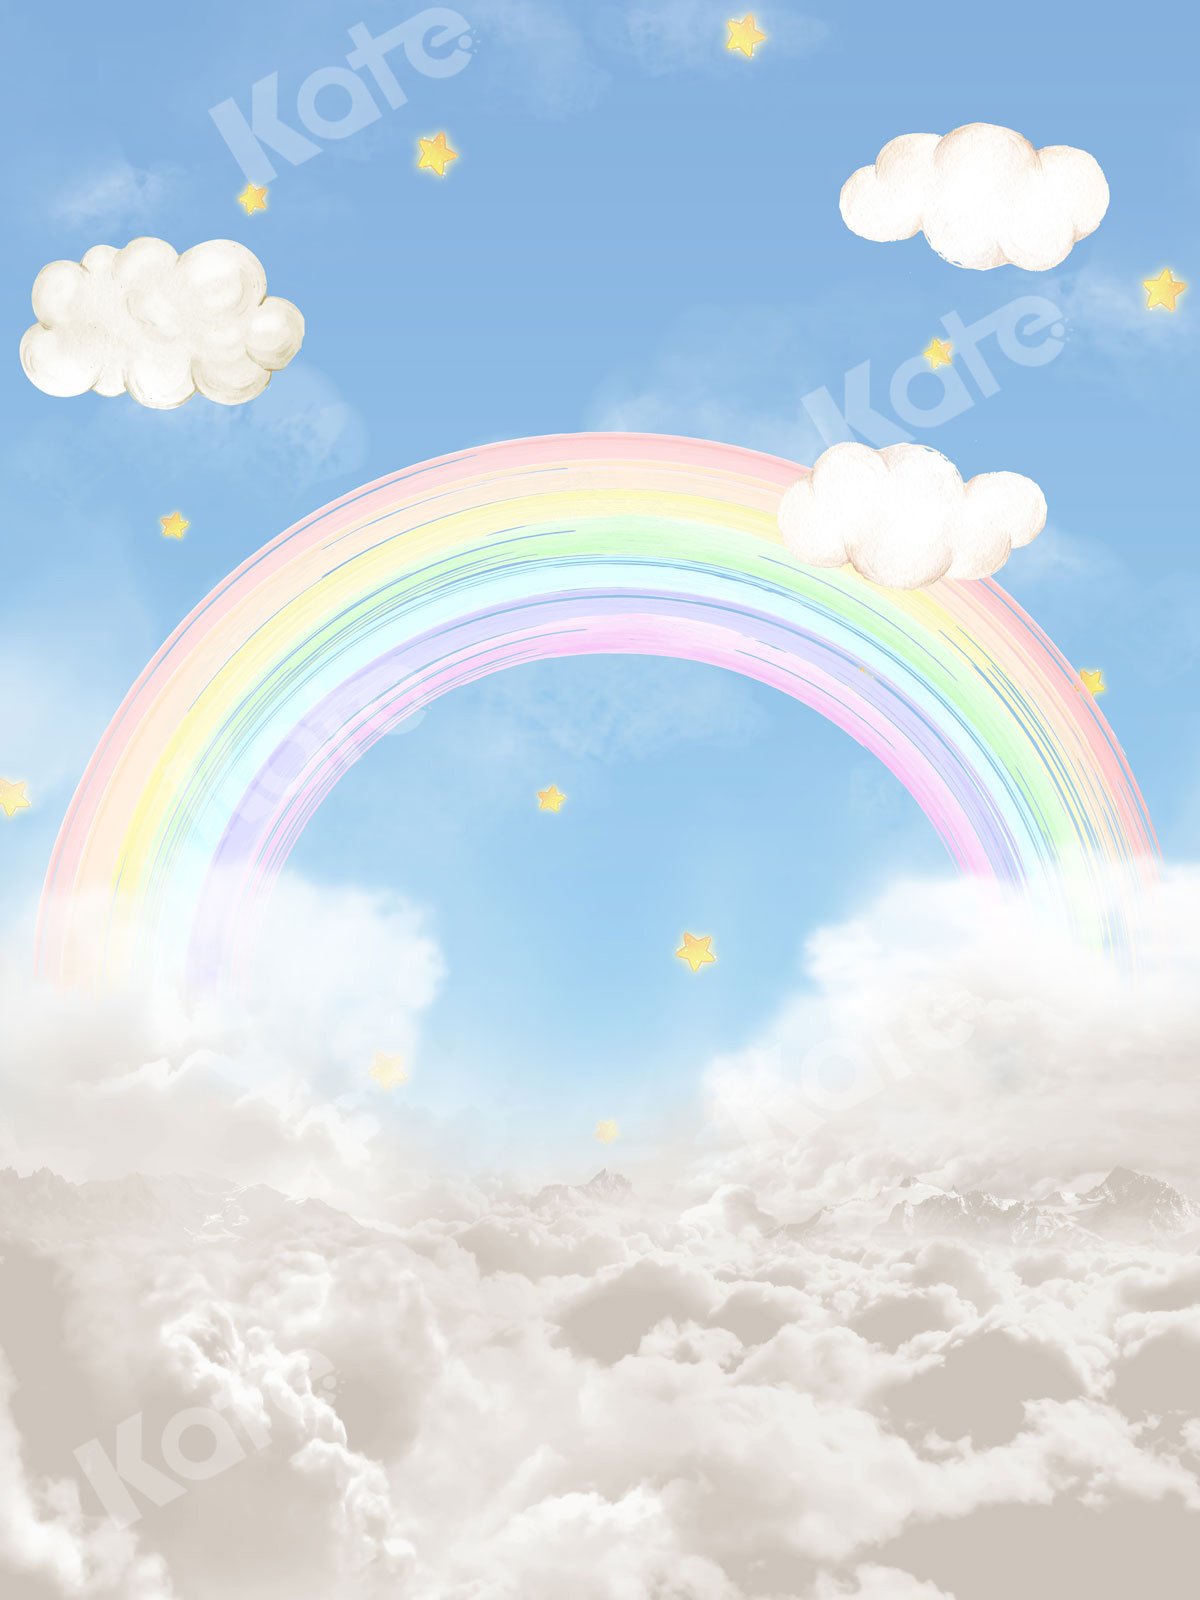 Kate nube arcoiris infantil telón de fondo diseñado por fotografía JS